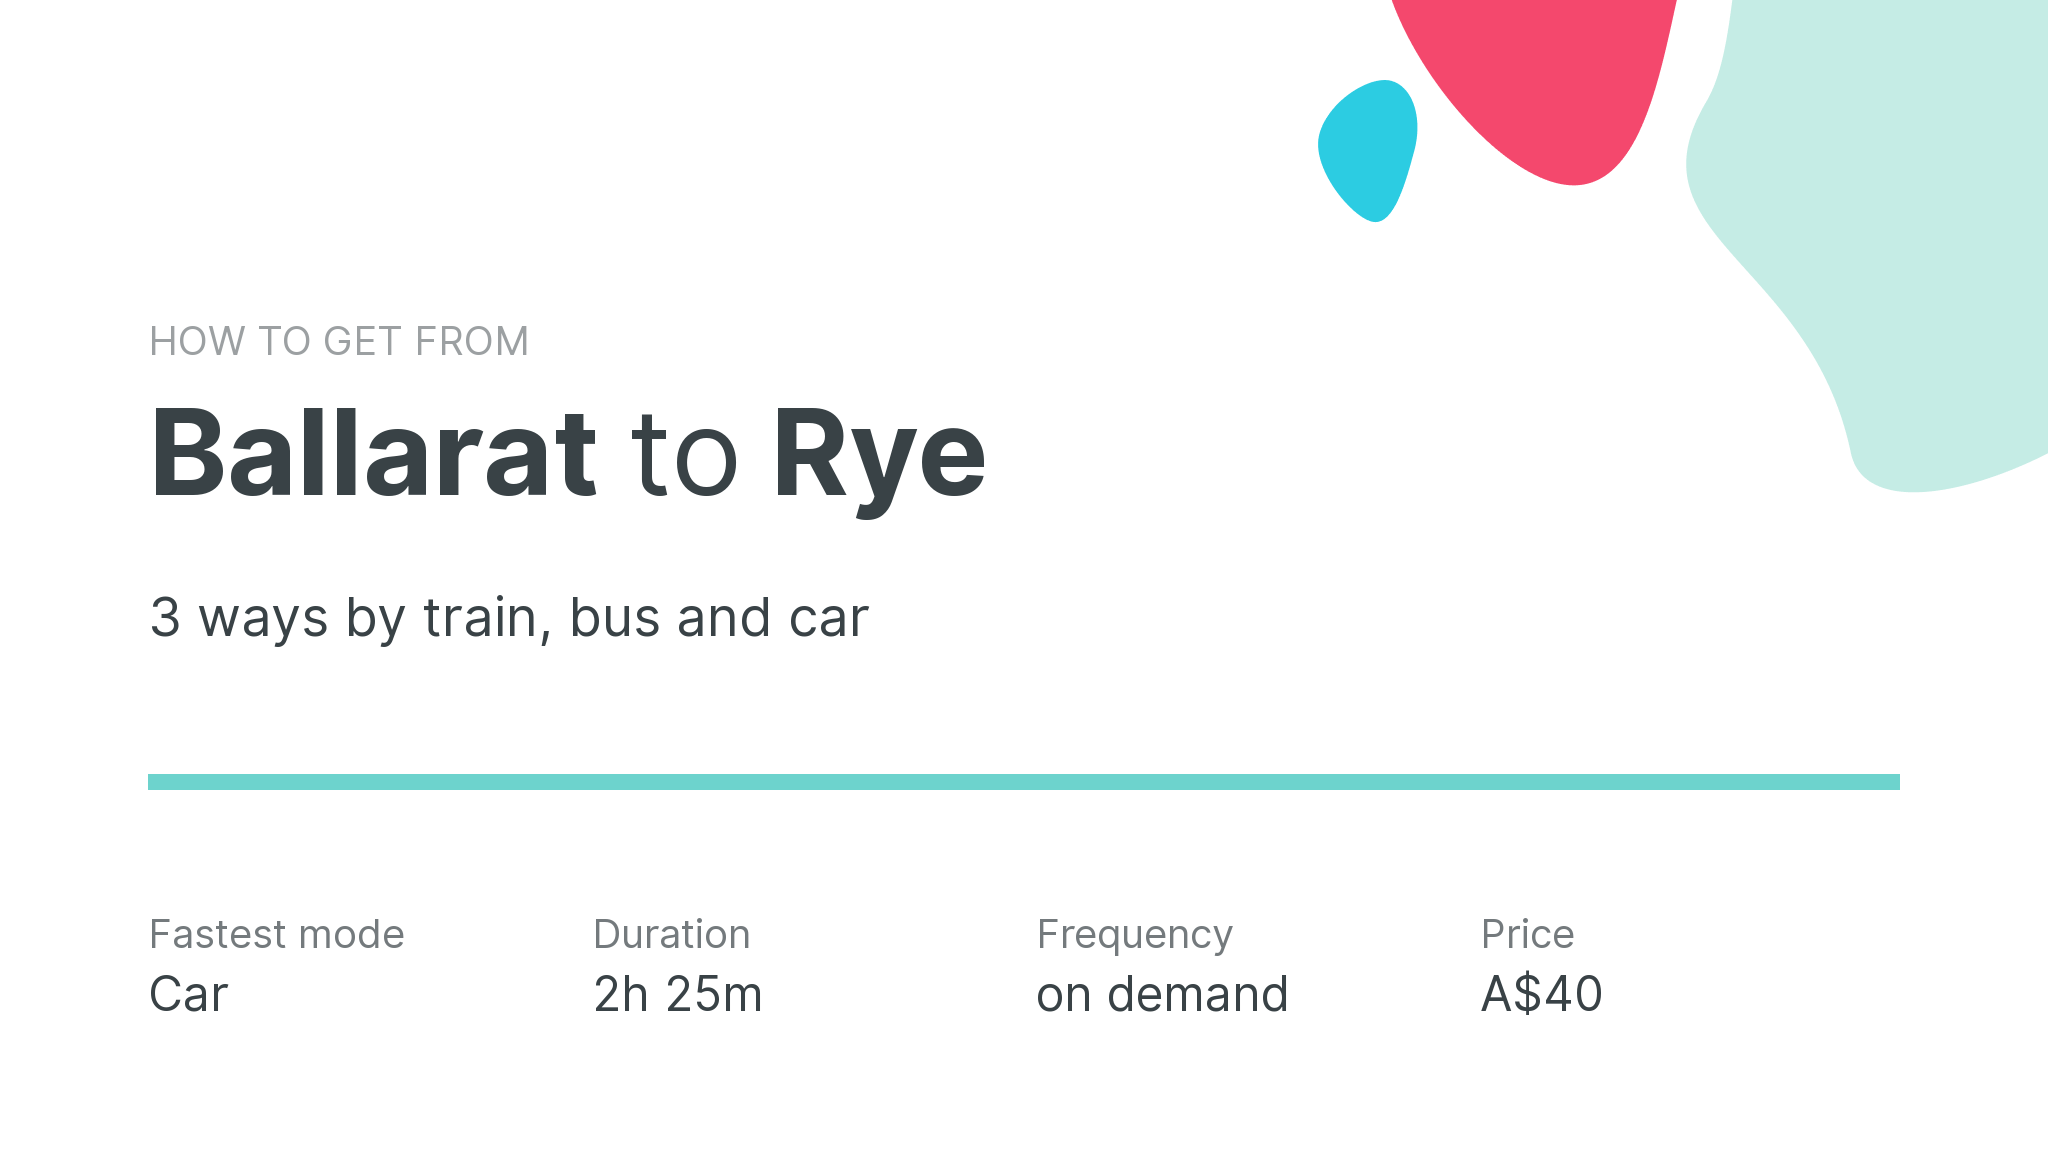 How do I get from Ballarat to Rye